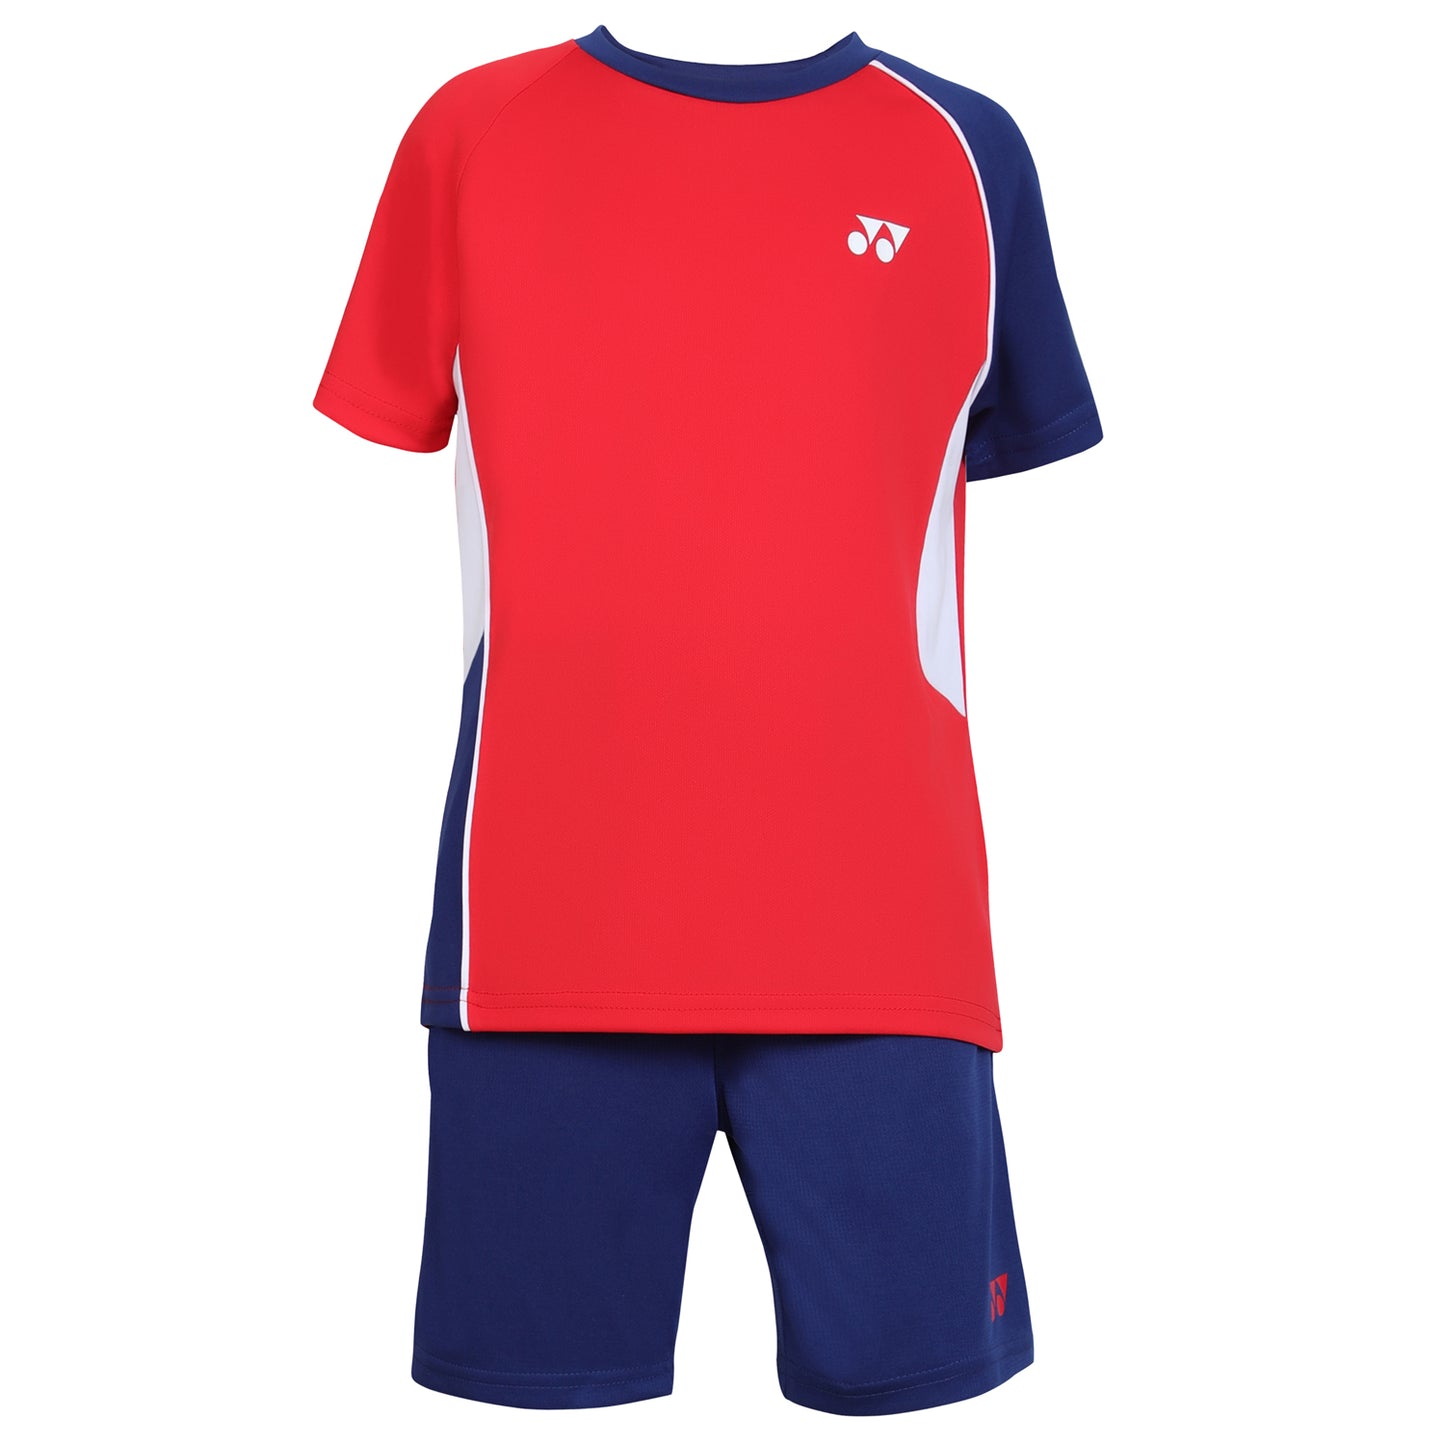 Yonex 1595 Round Neck T-Shirt and Short set for Junior, HighRisk Red - Best Price online Prokicksports.com